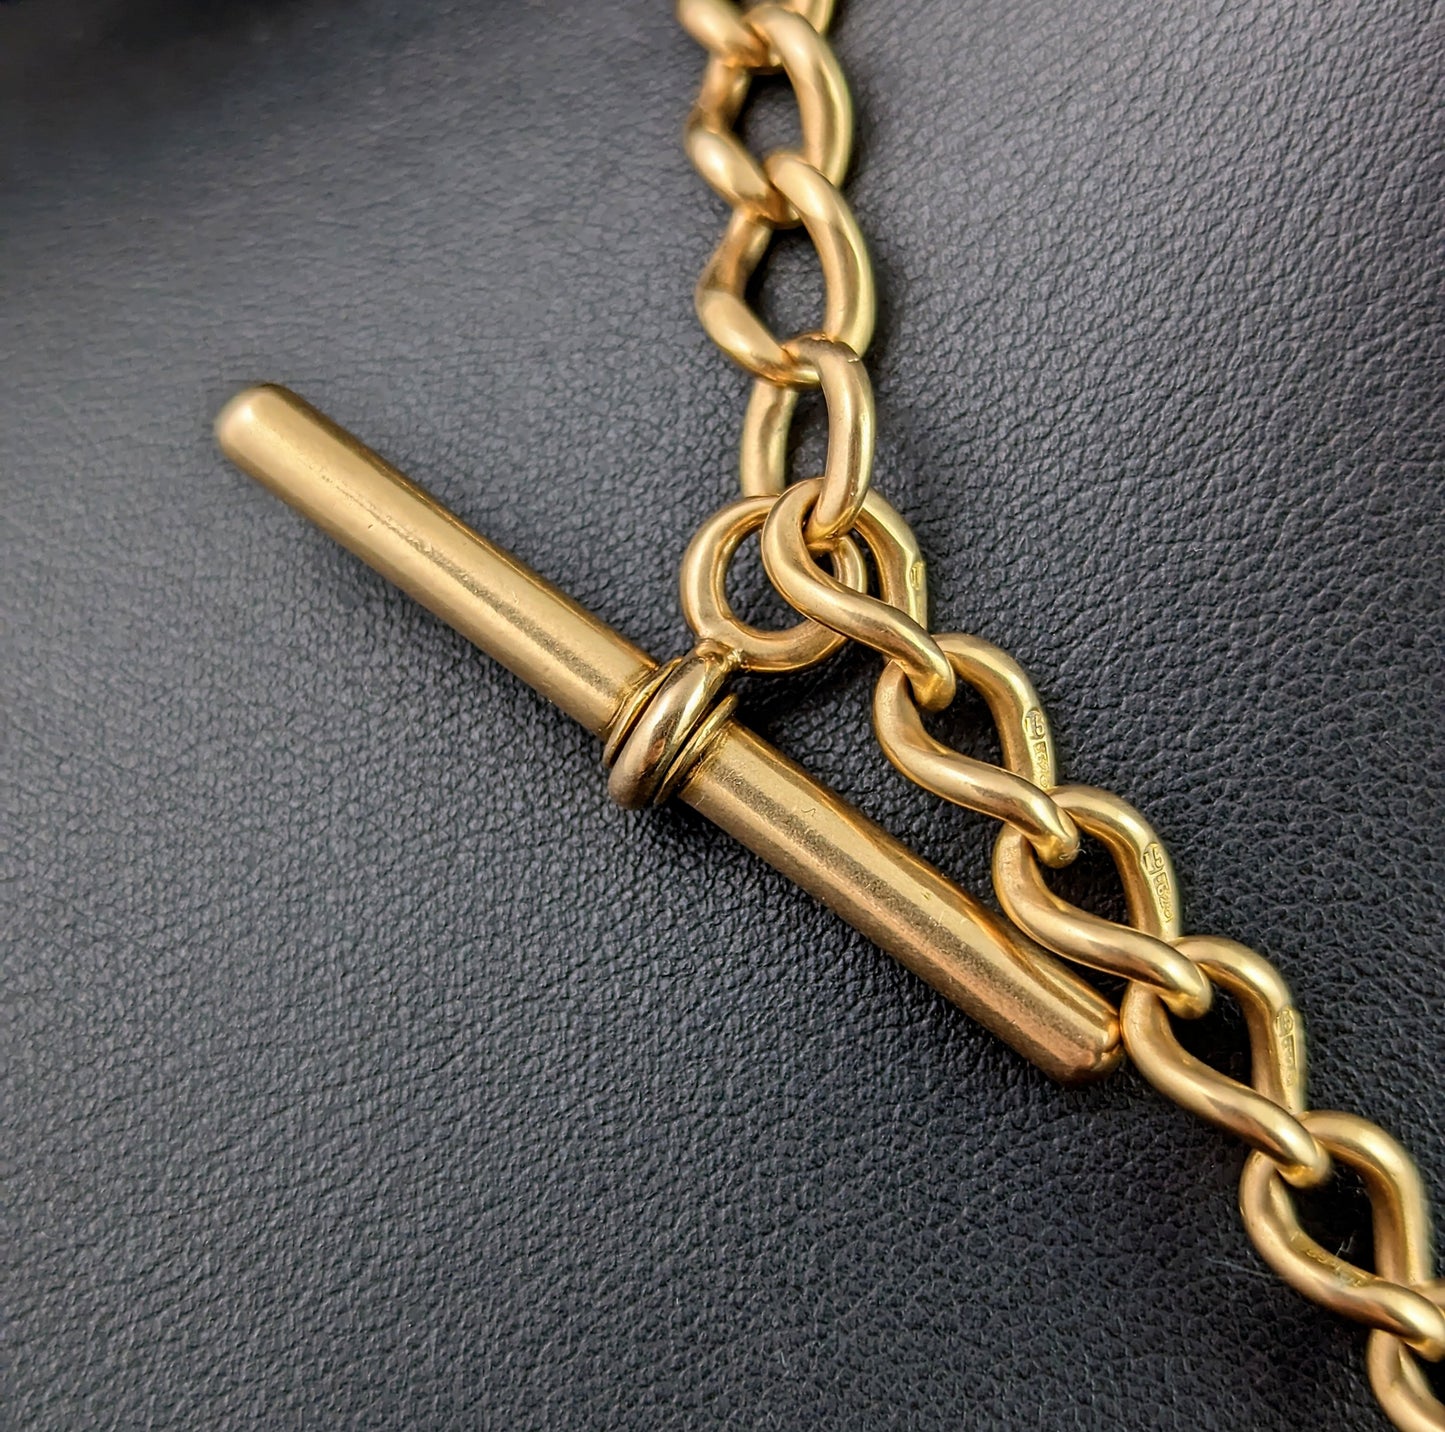 Antique 15ct gold Albert chain, watch chain necklace, heavy